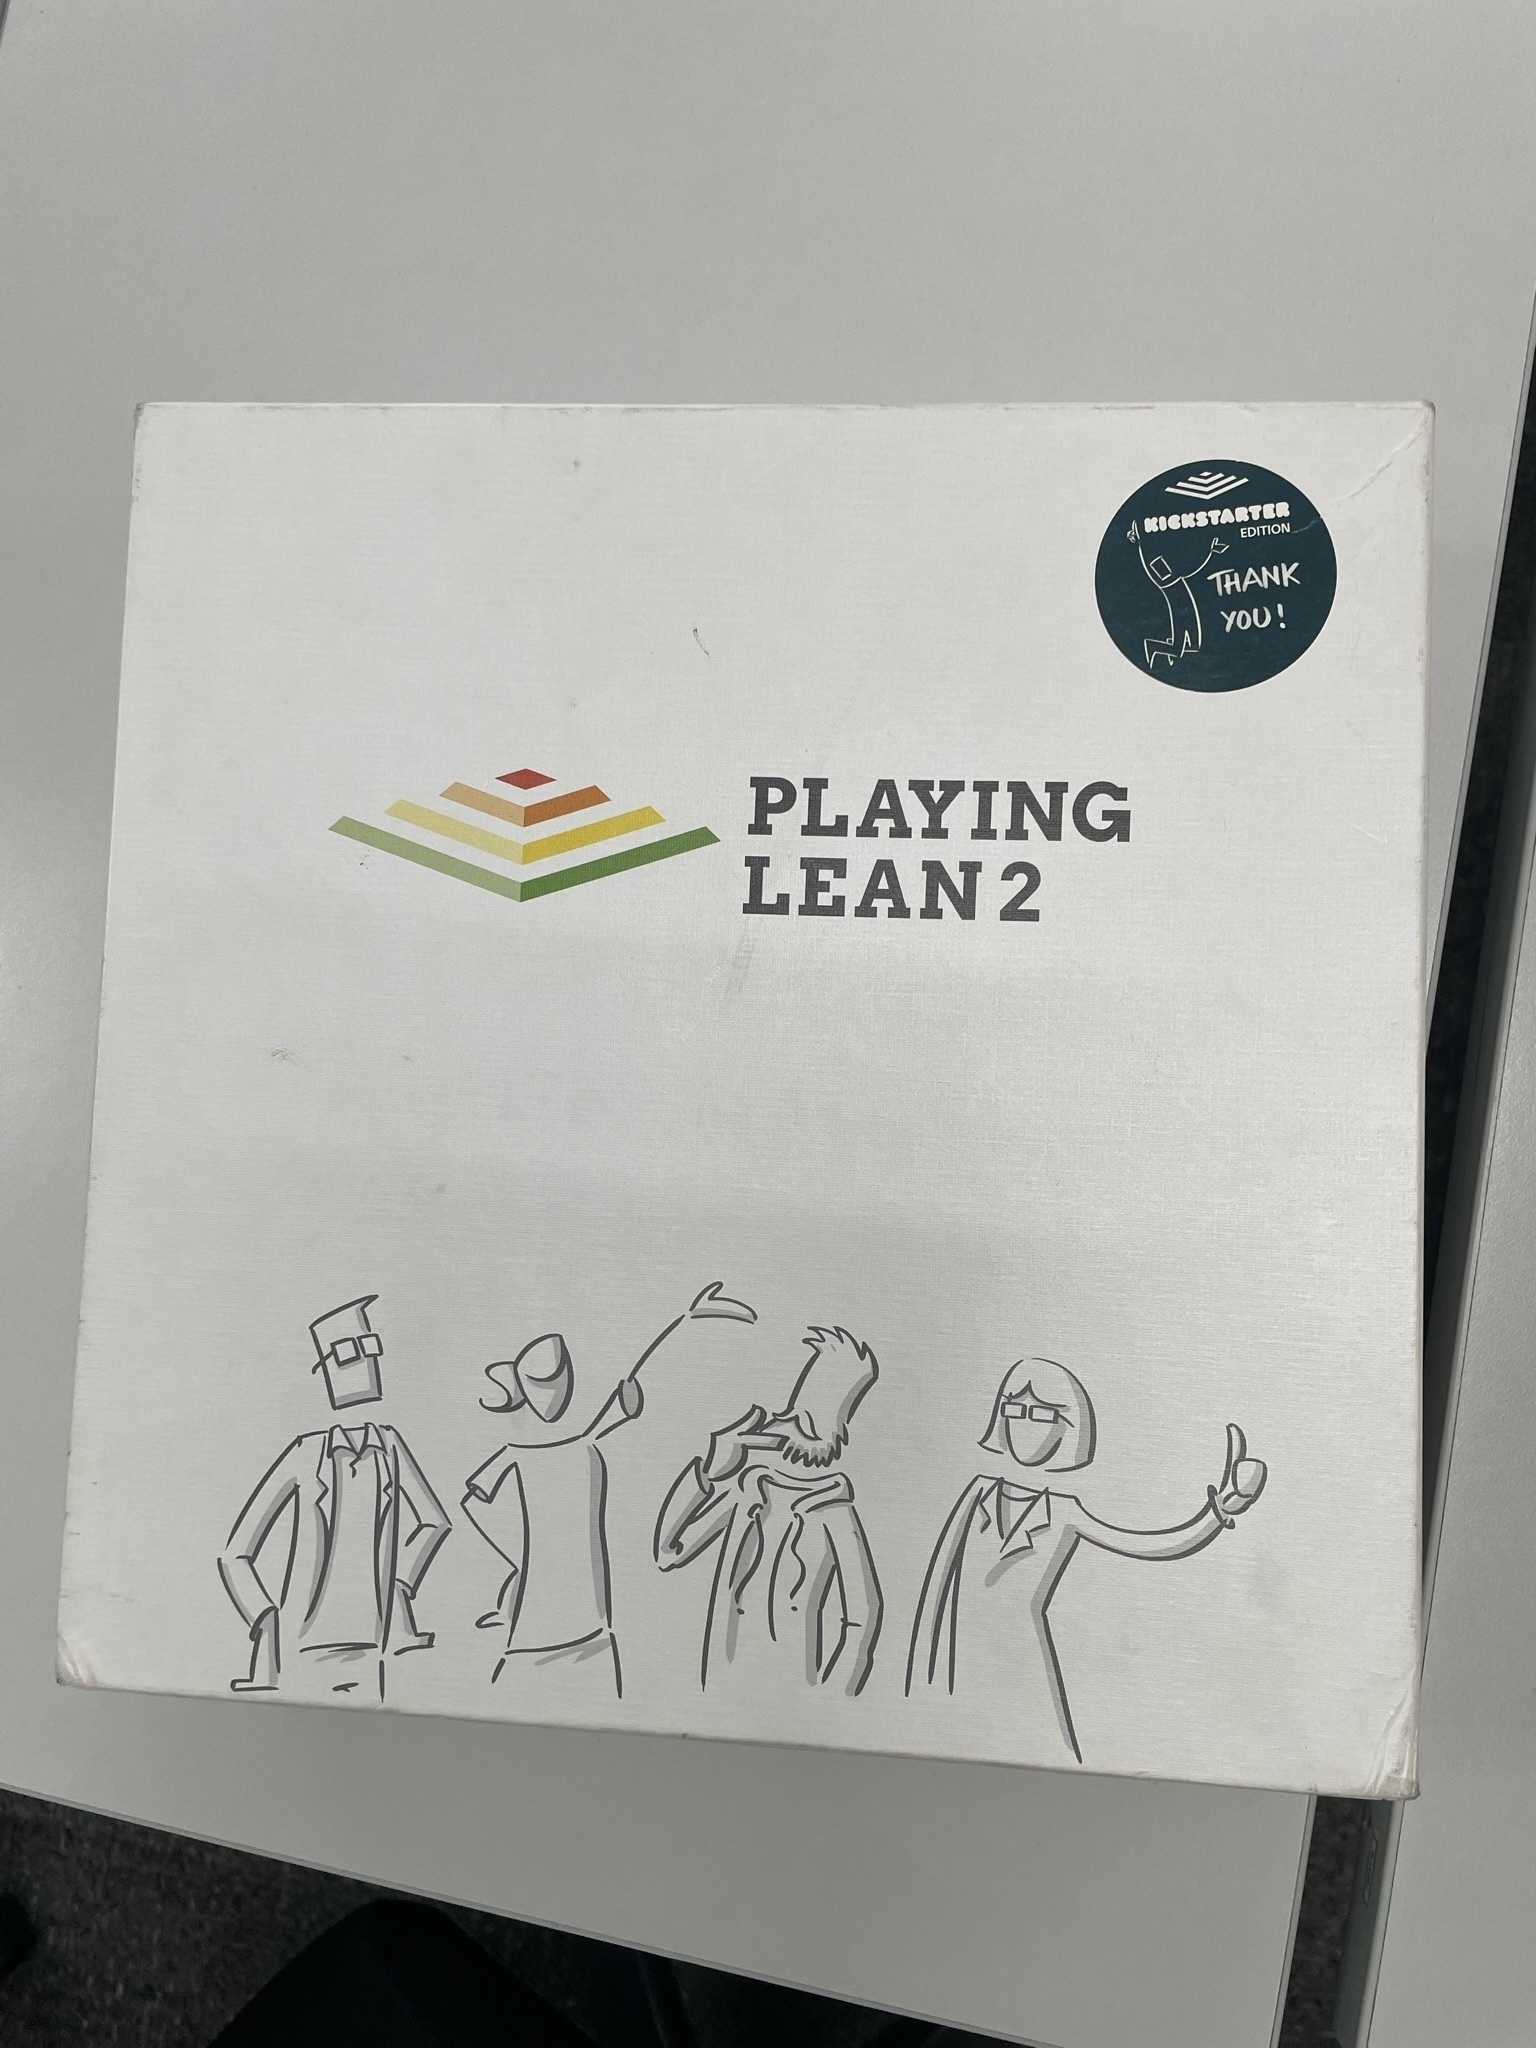 Playing Lean 2: Kickstarter edition board game box cover.